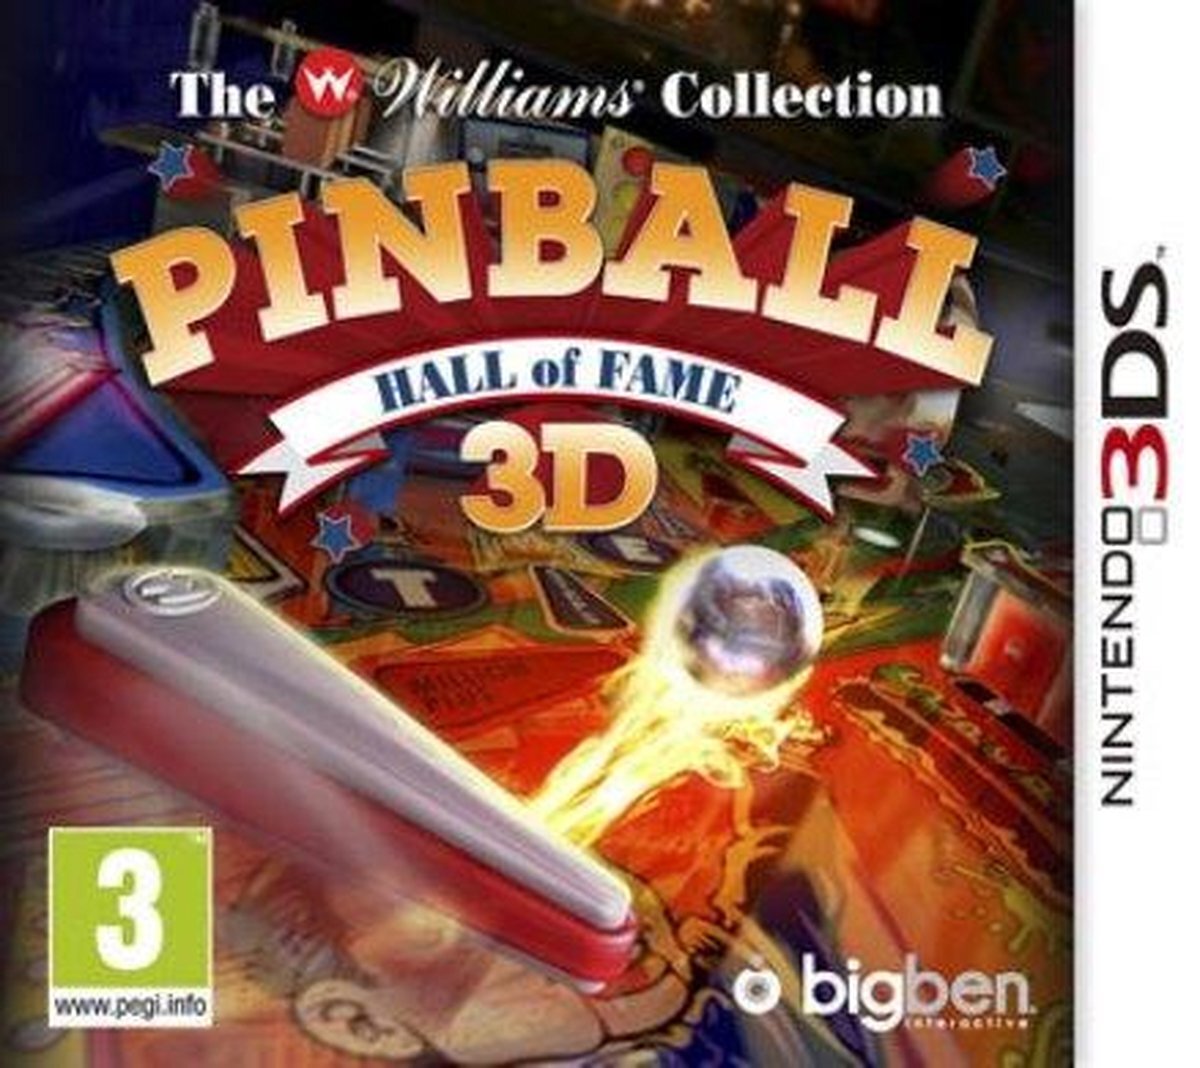 BigBen pinball hall of fame Nintendo 3DS